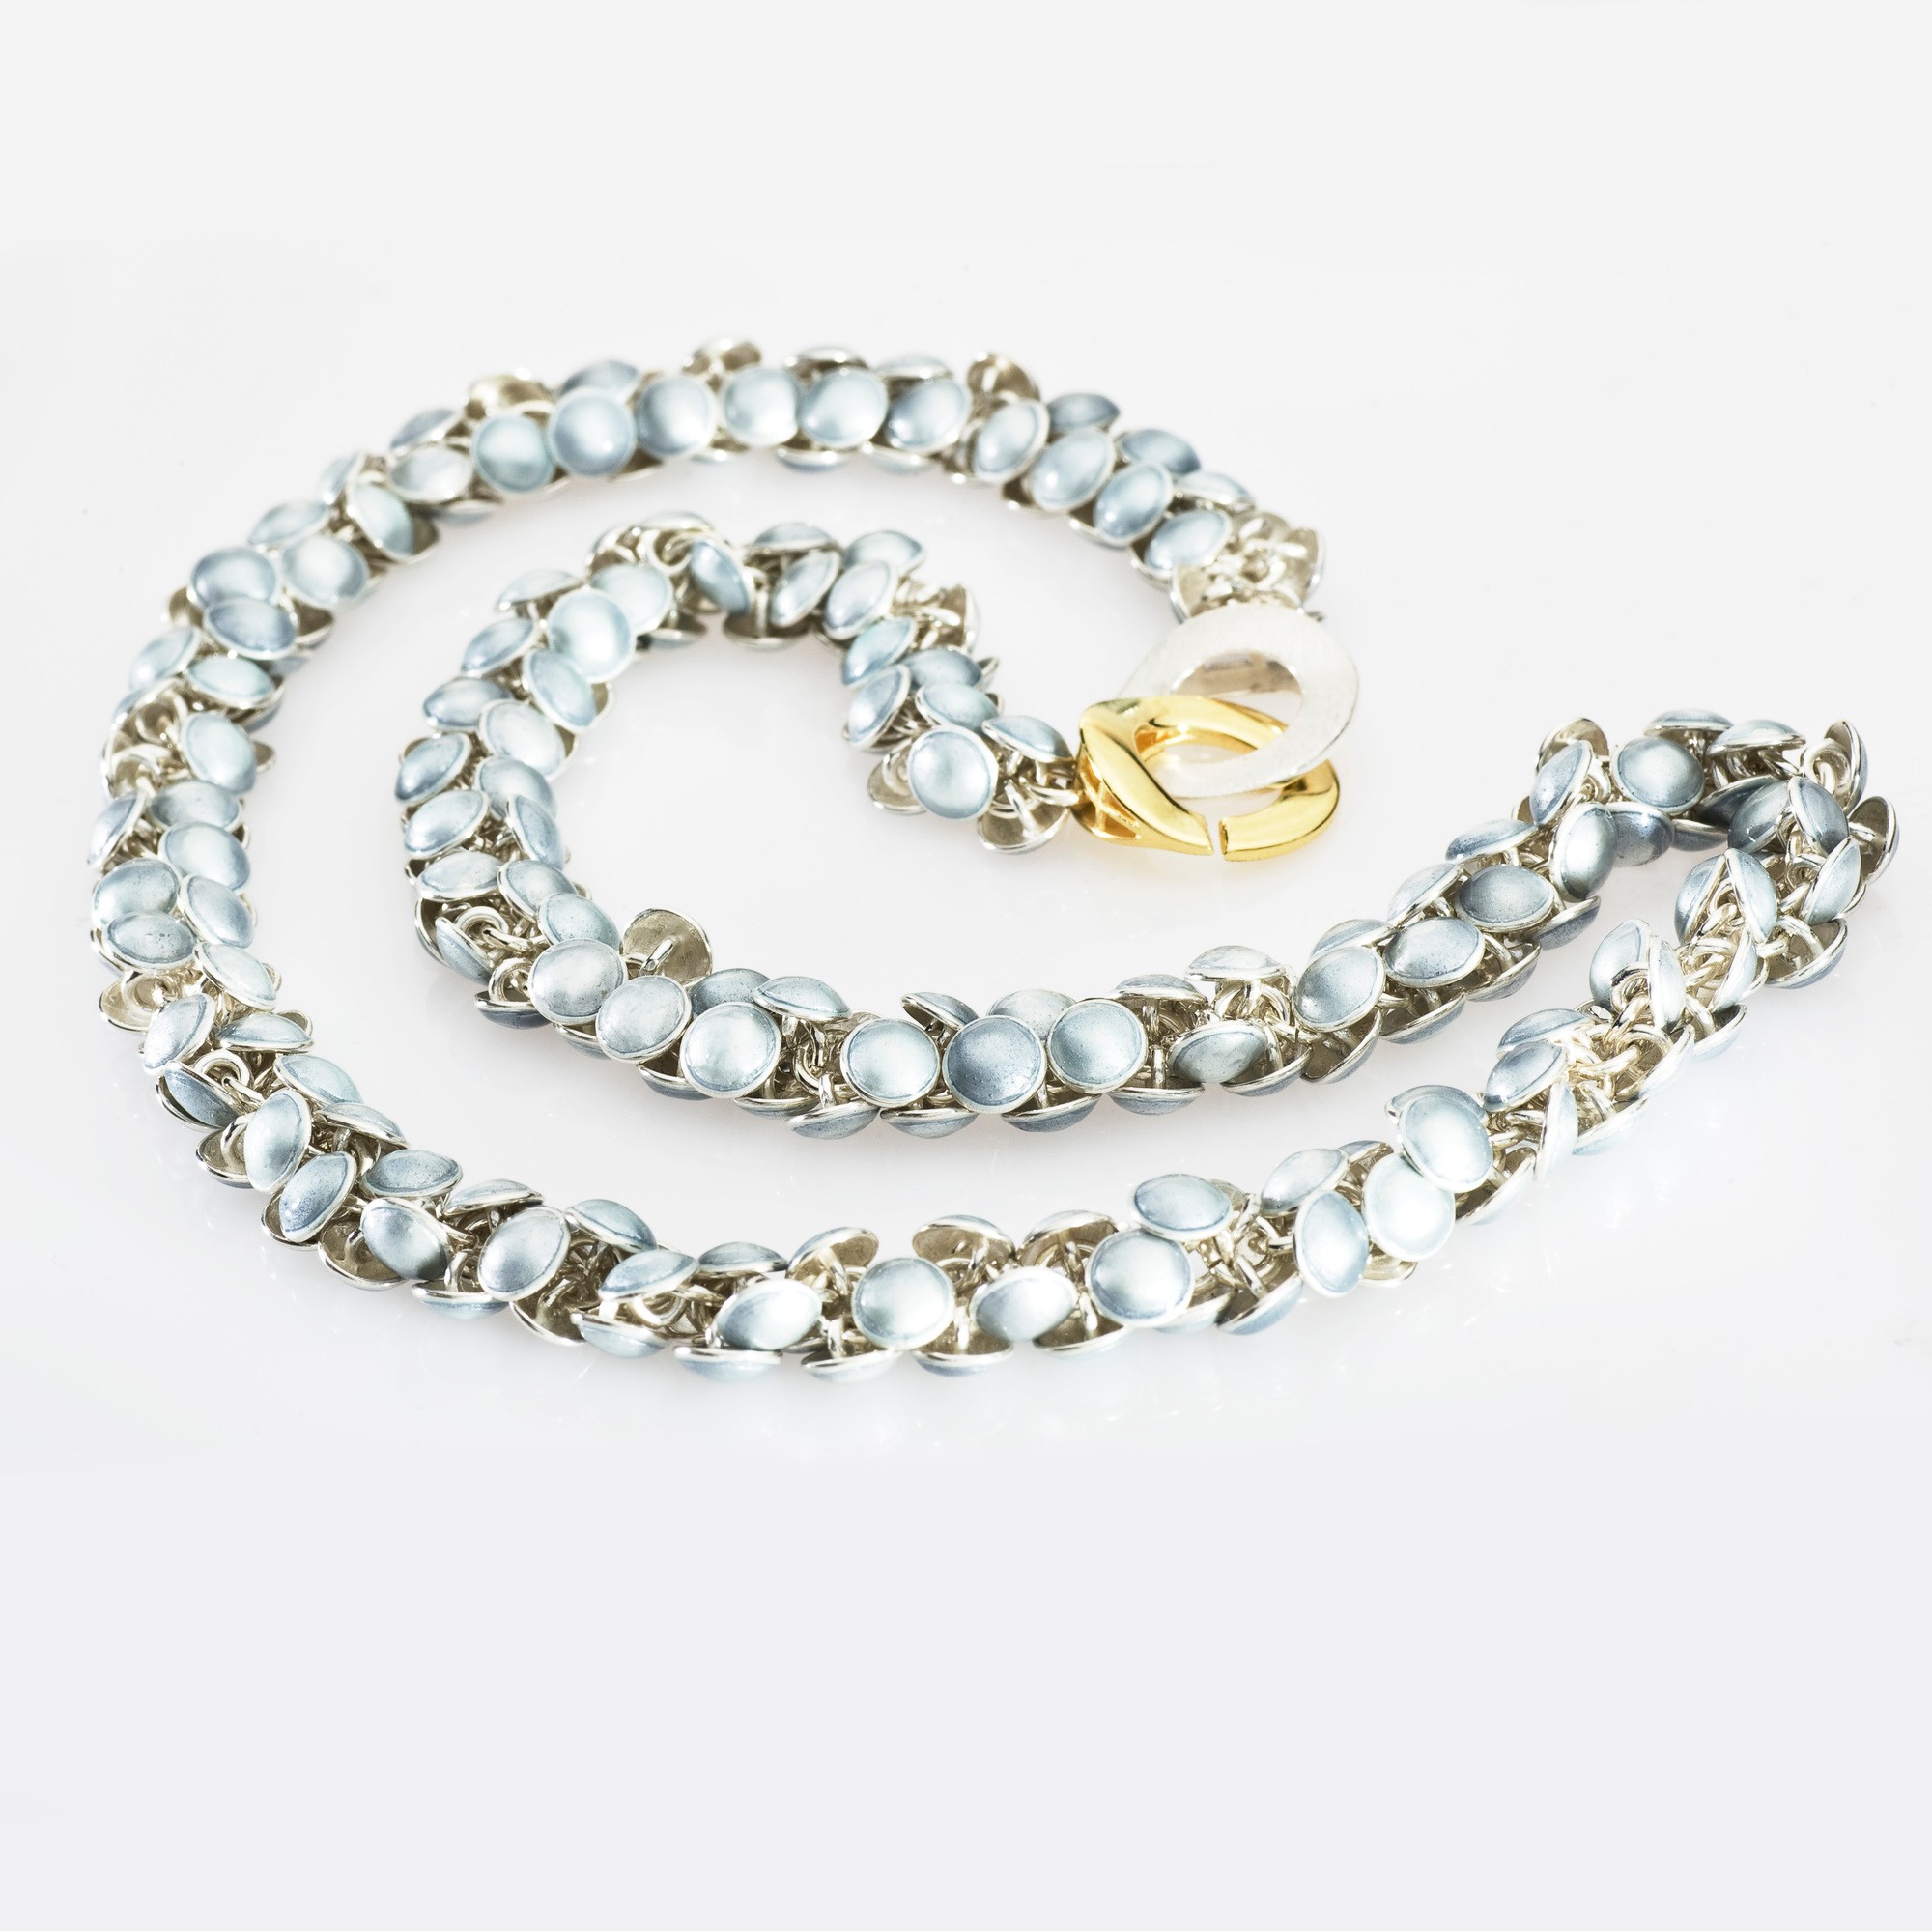 Seashell necklace, 45 cm (2012) — Kathrine Lindman